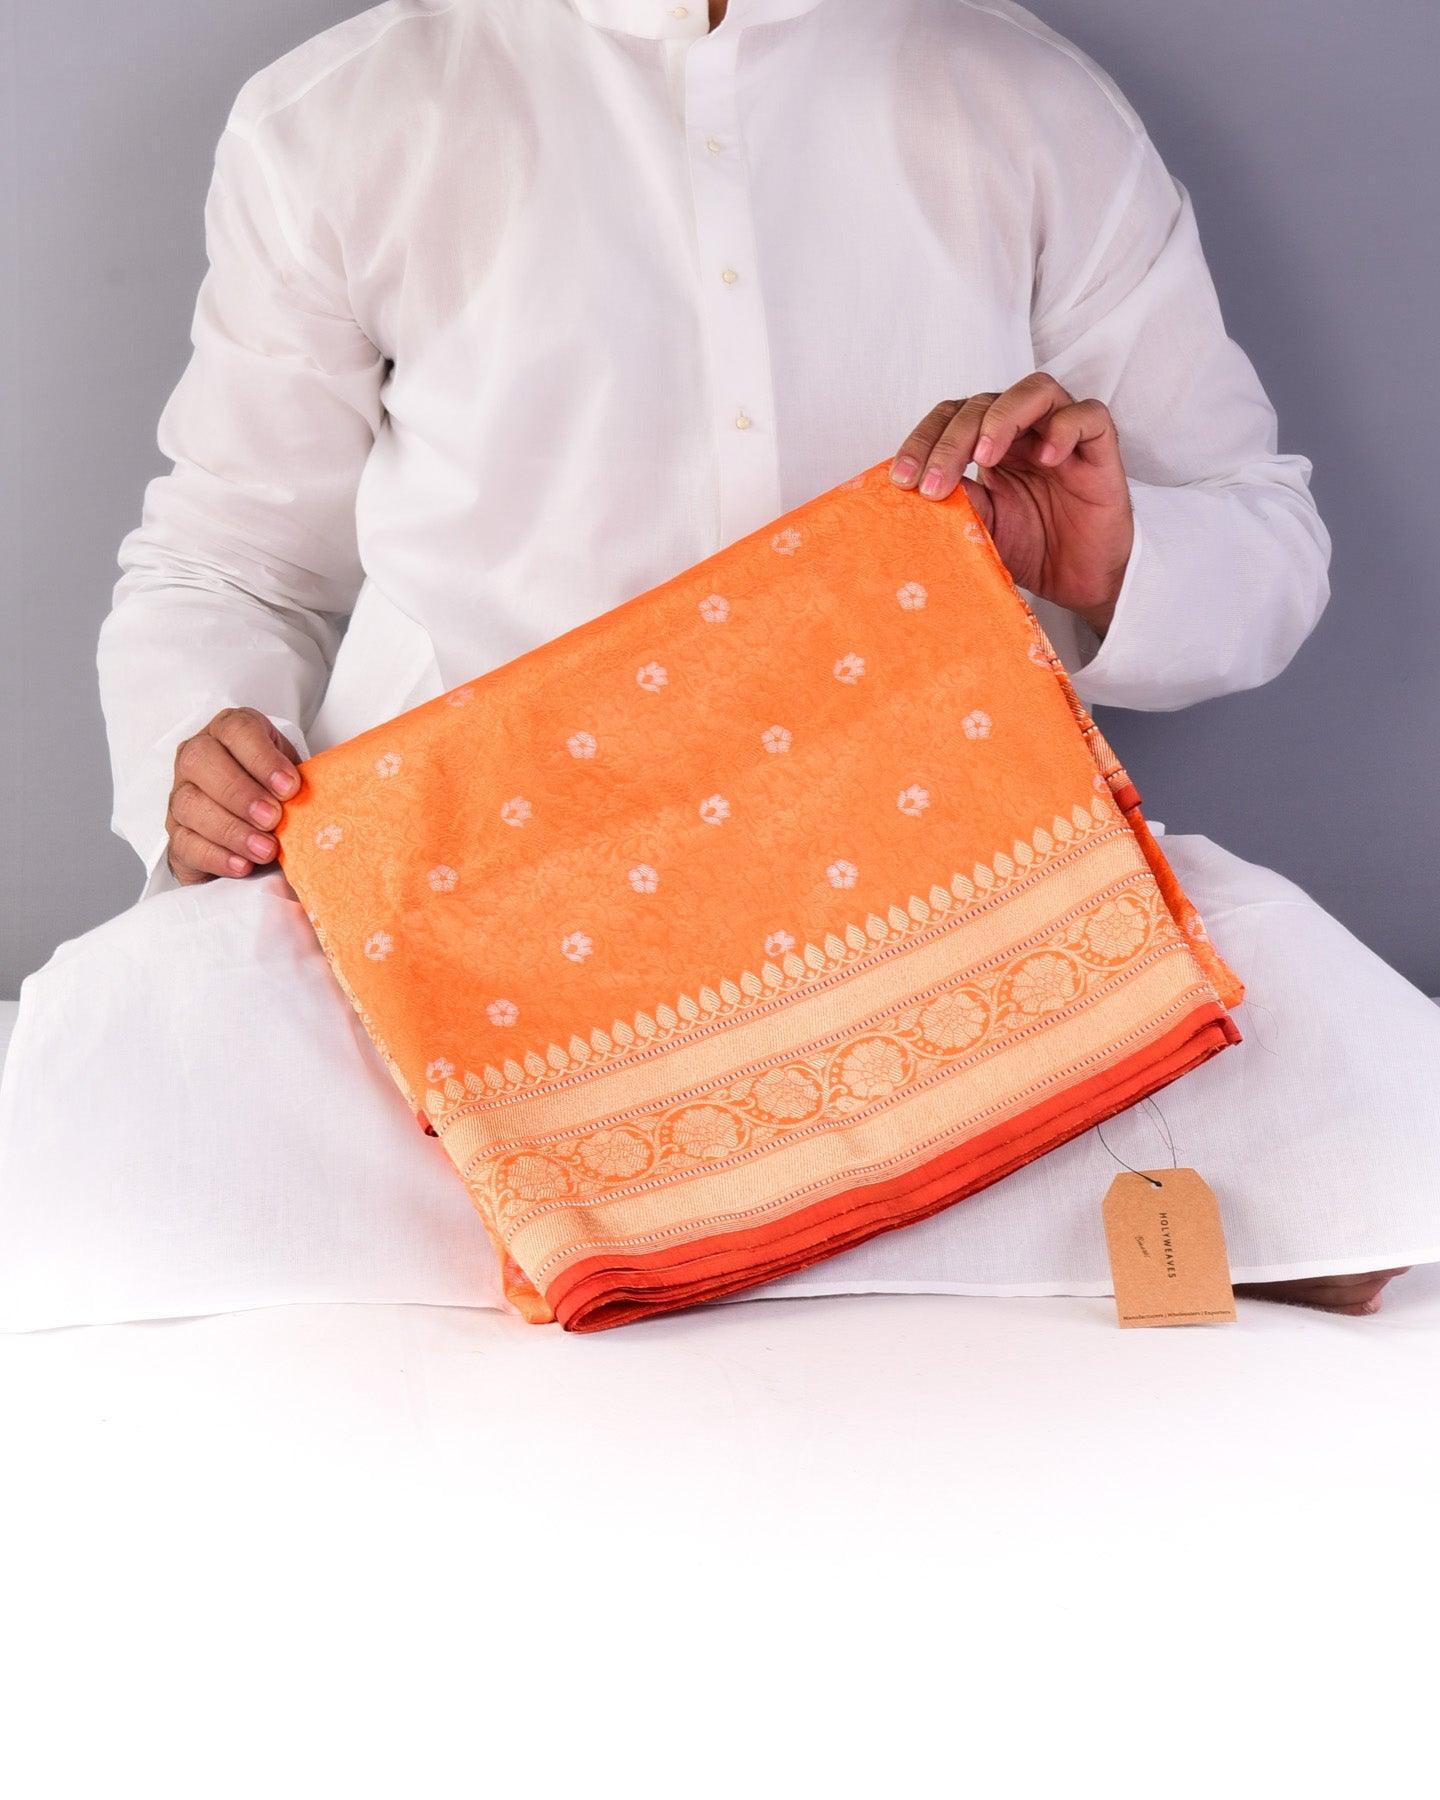 Orange Alfi Sona Rupa Jaal Cutwork Banarasi Brocade Handwoven Katan Silk Saree - By HolyWeaves, Benares